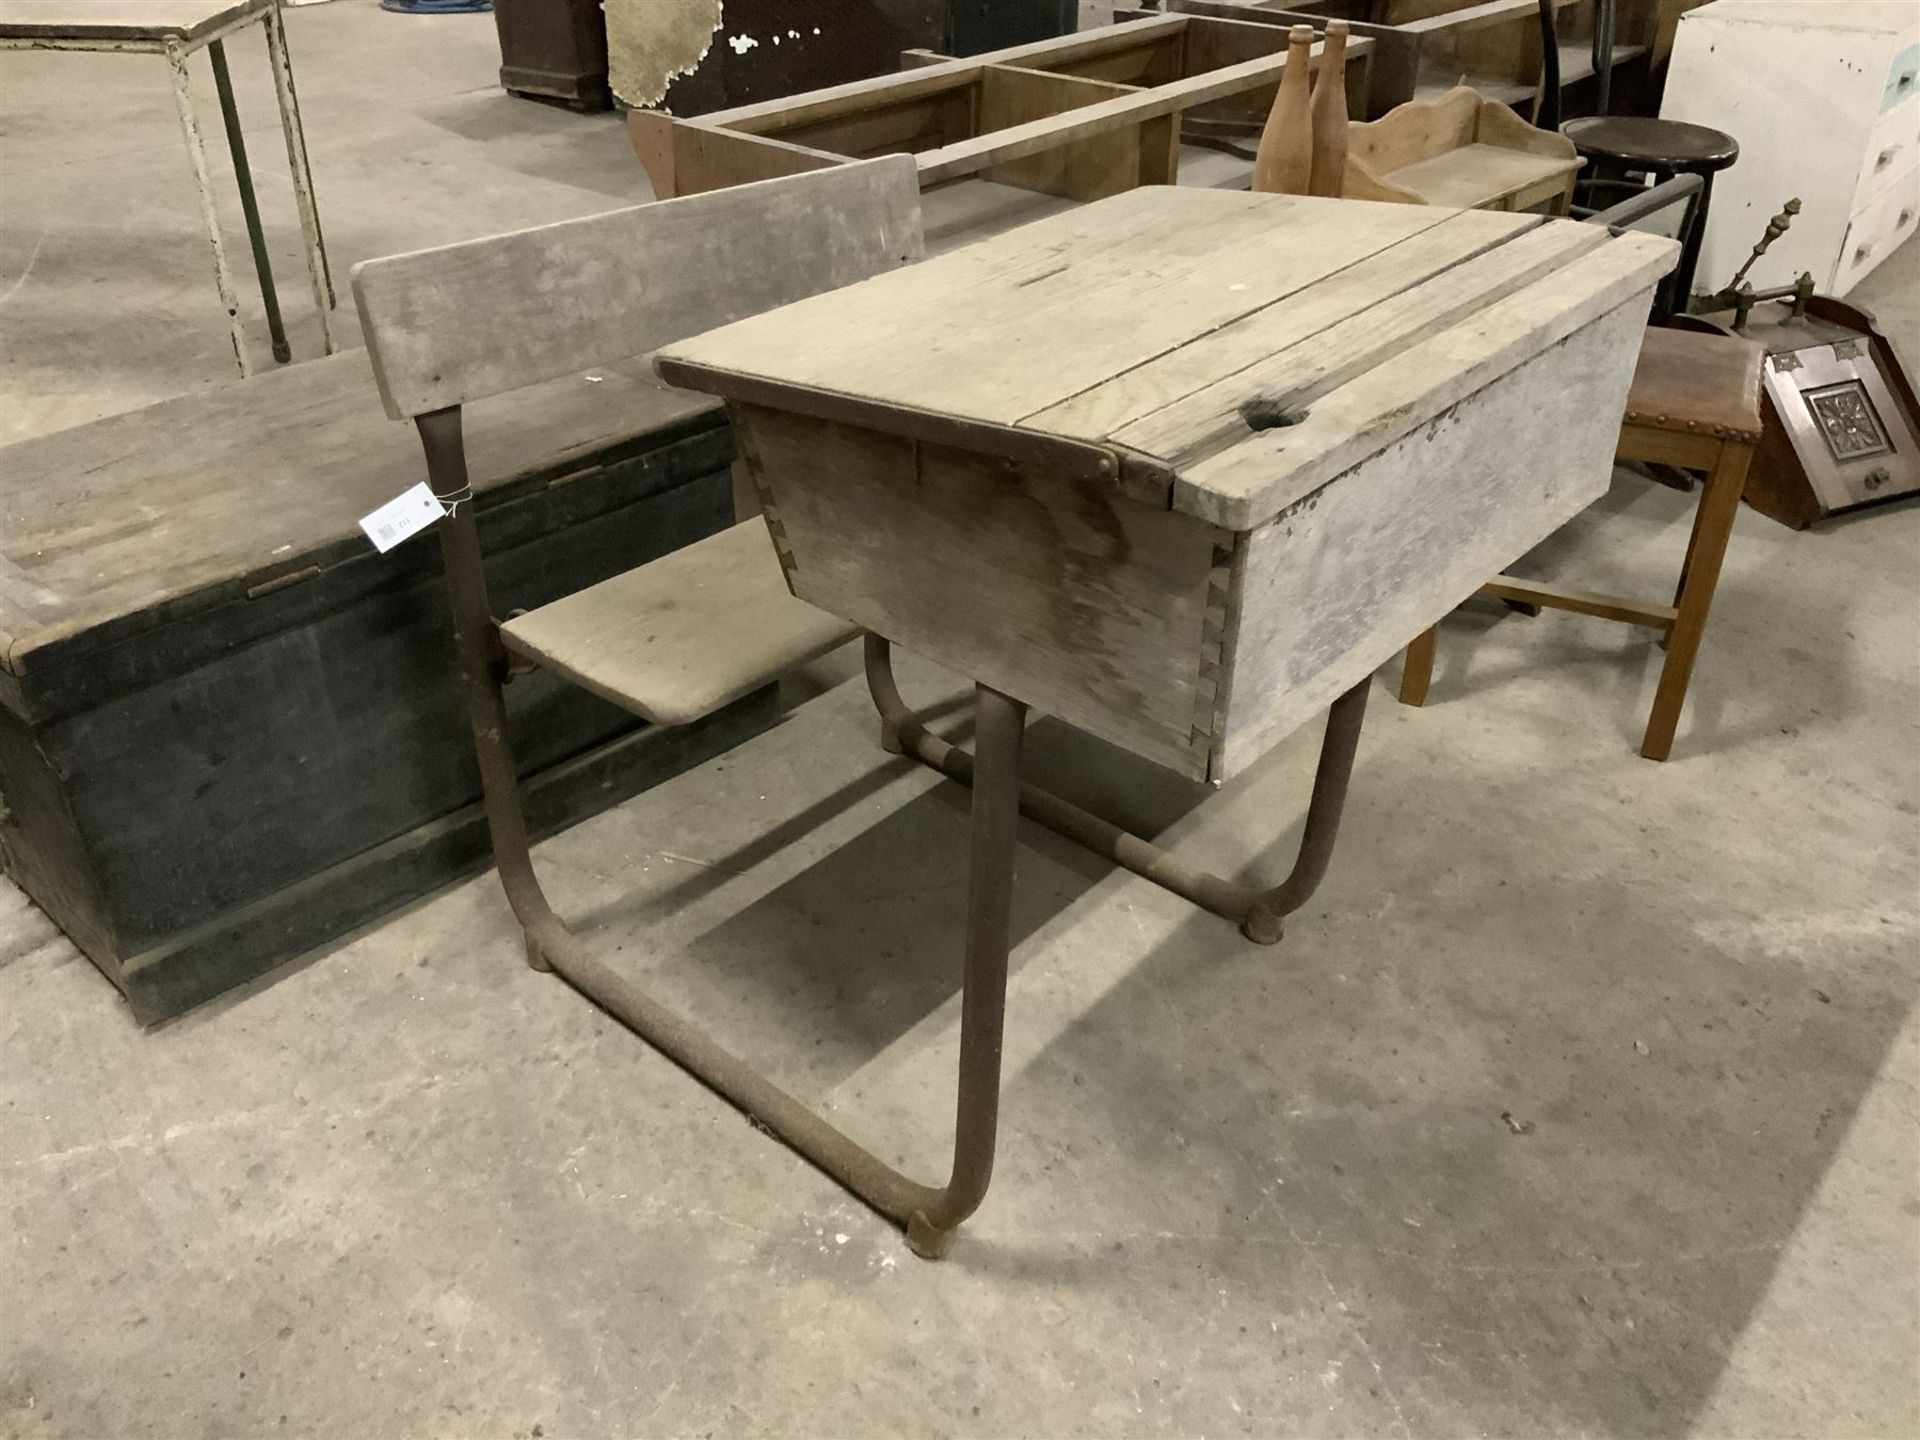 Oak and steel industrial school desk - Image 2 of 2